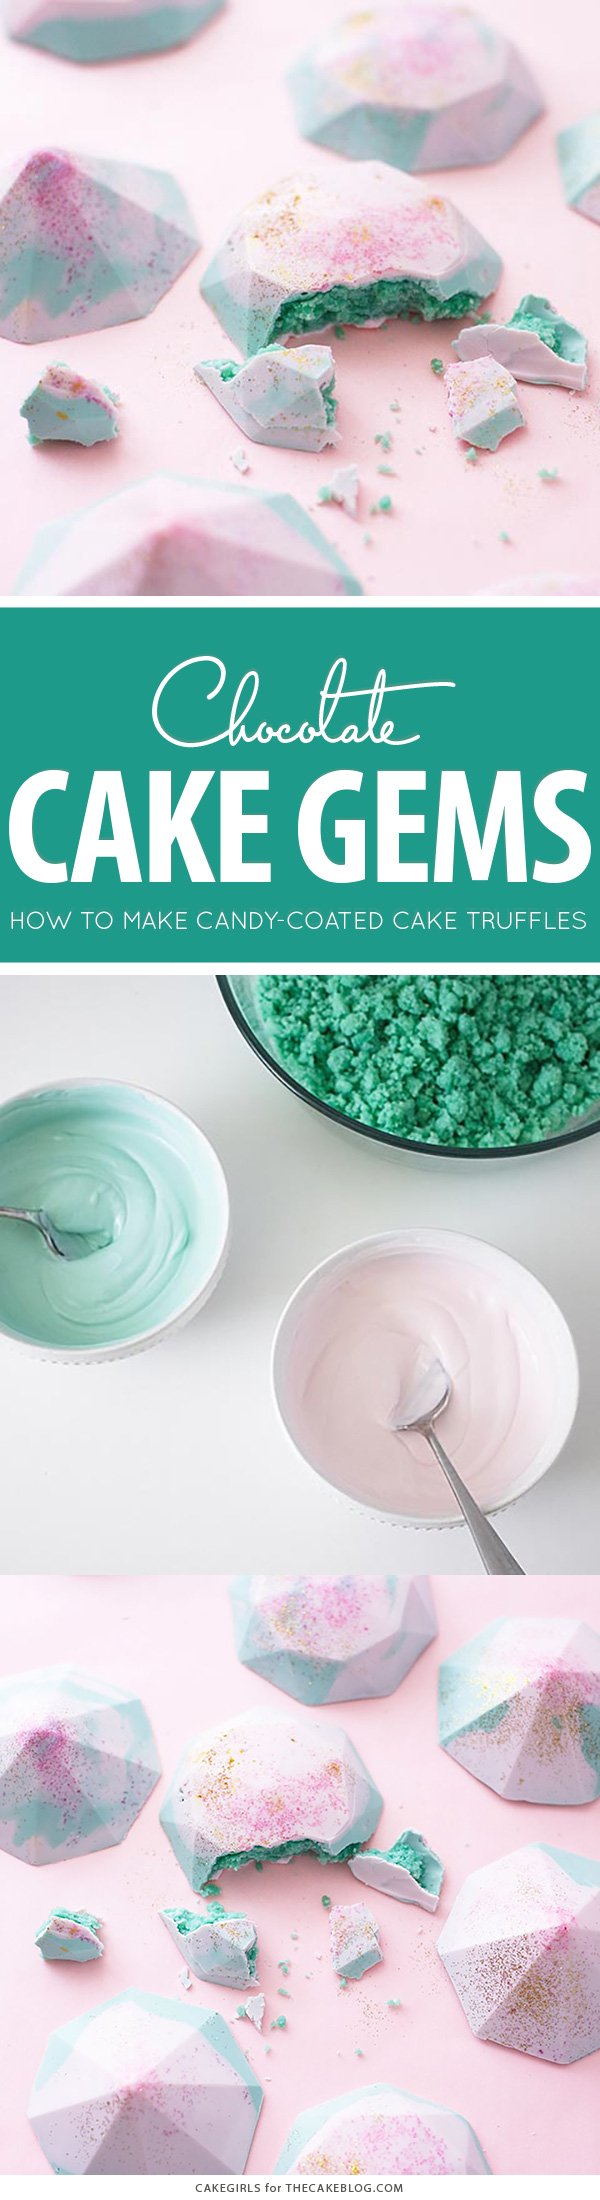 Cake-gems-tutorial-pv7